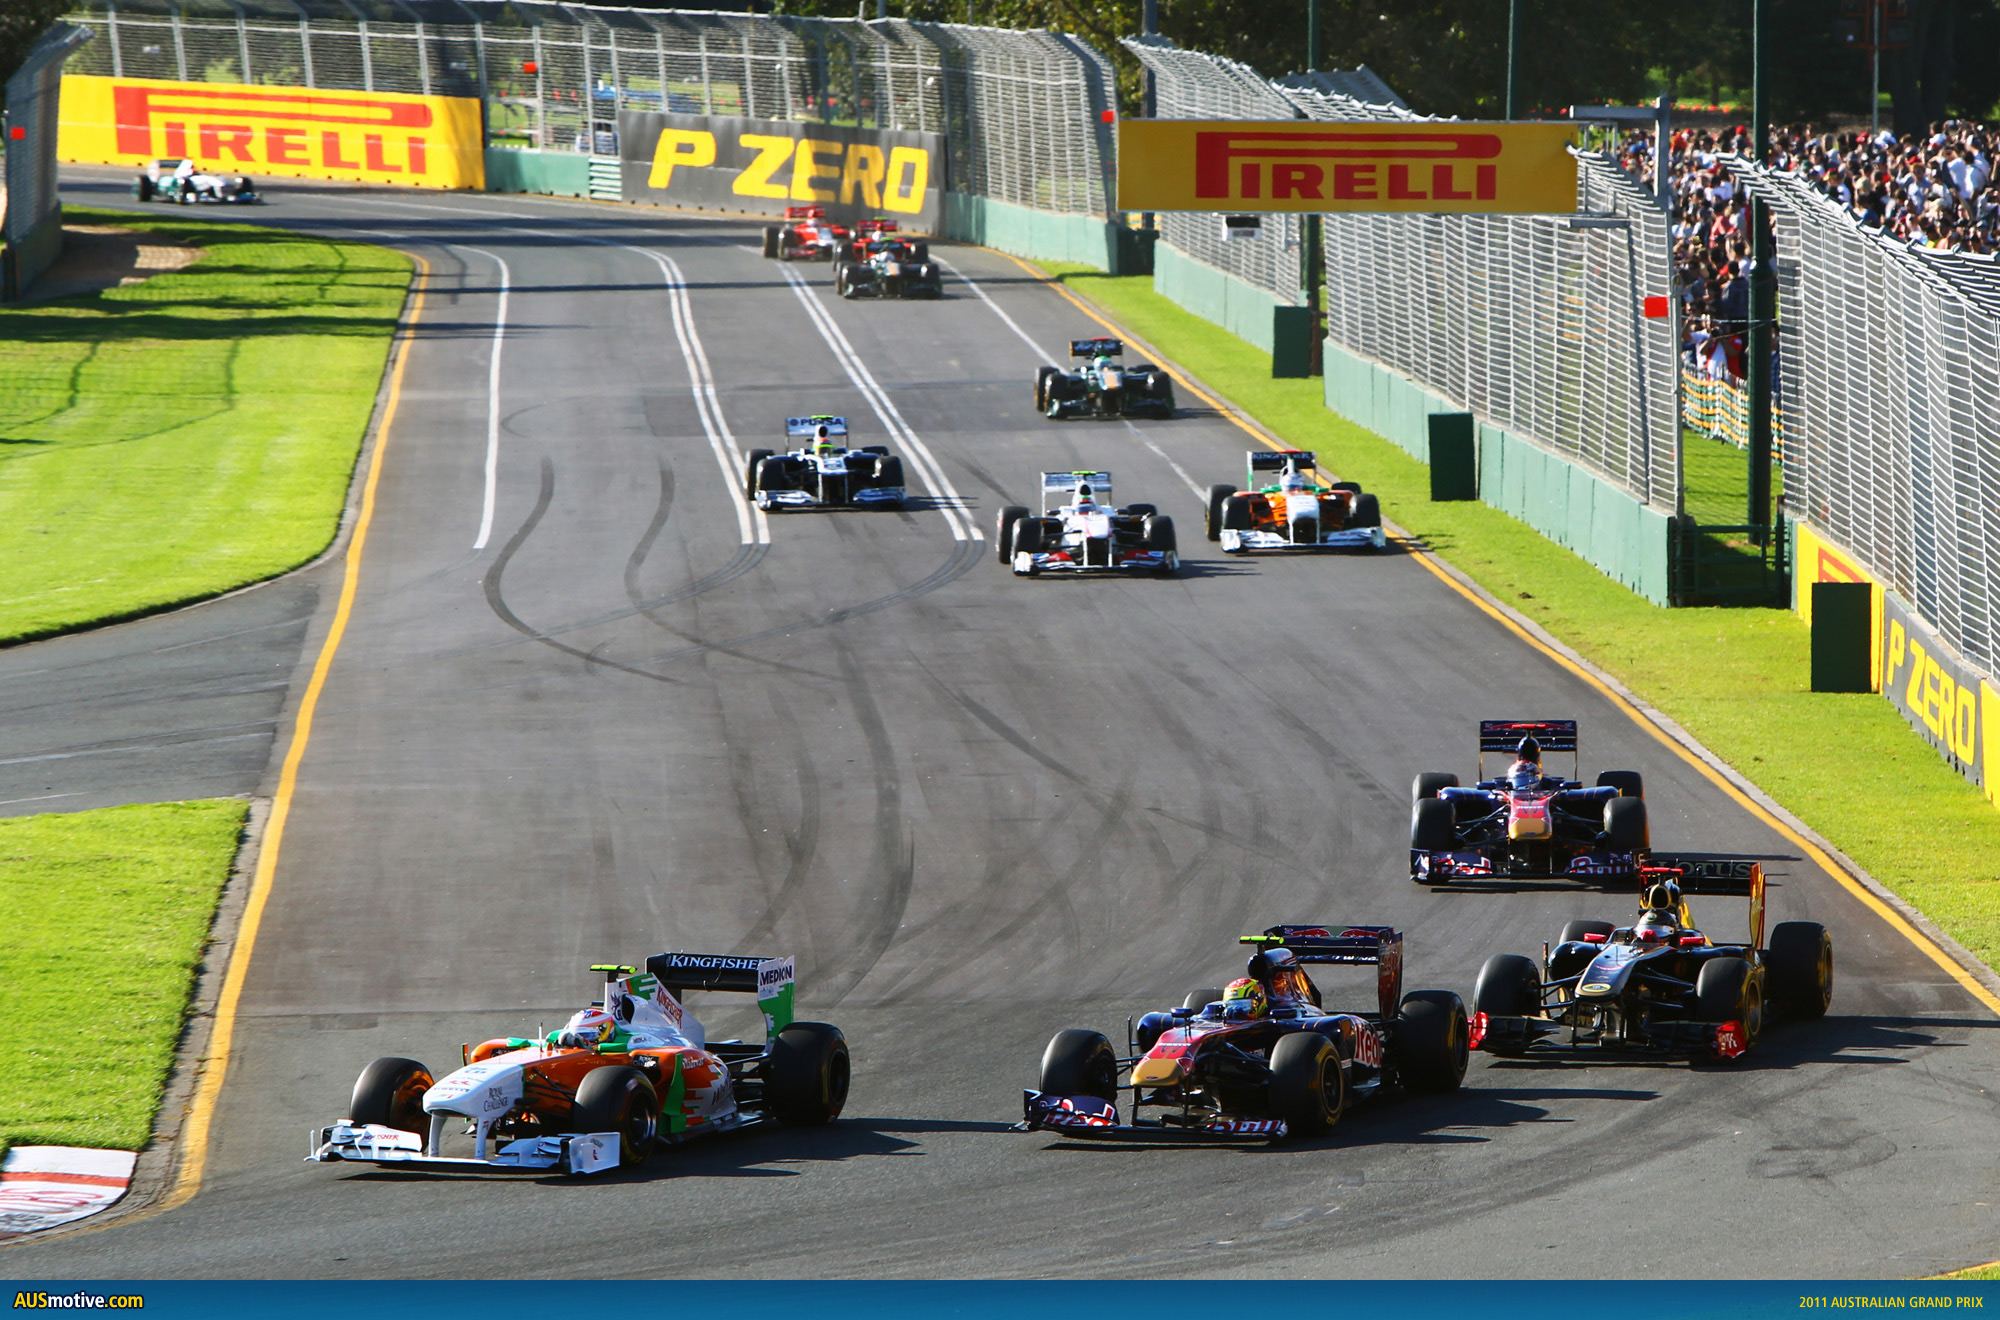 2011 Australian Grand Prix in pictures – AUSmotive.com